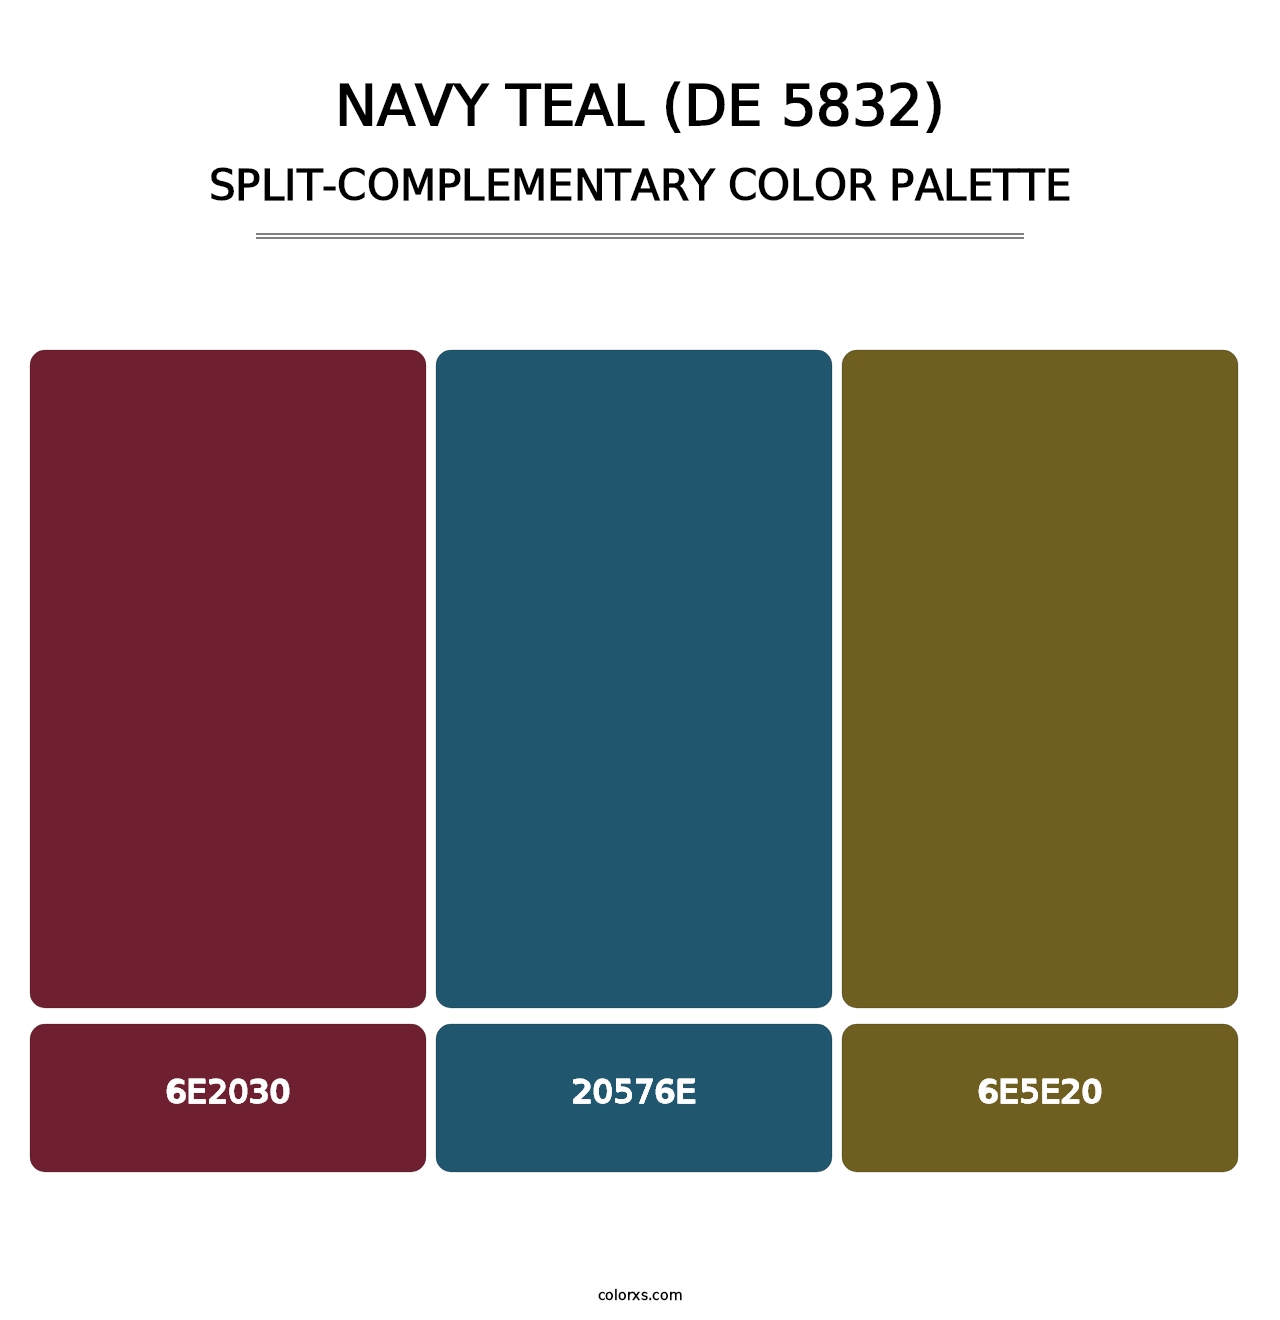 Navy Teal (DE 5832) - Split-Complementary Color Palette